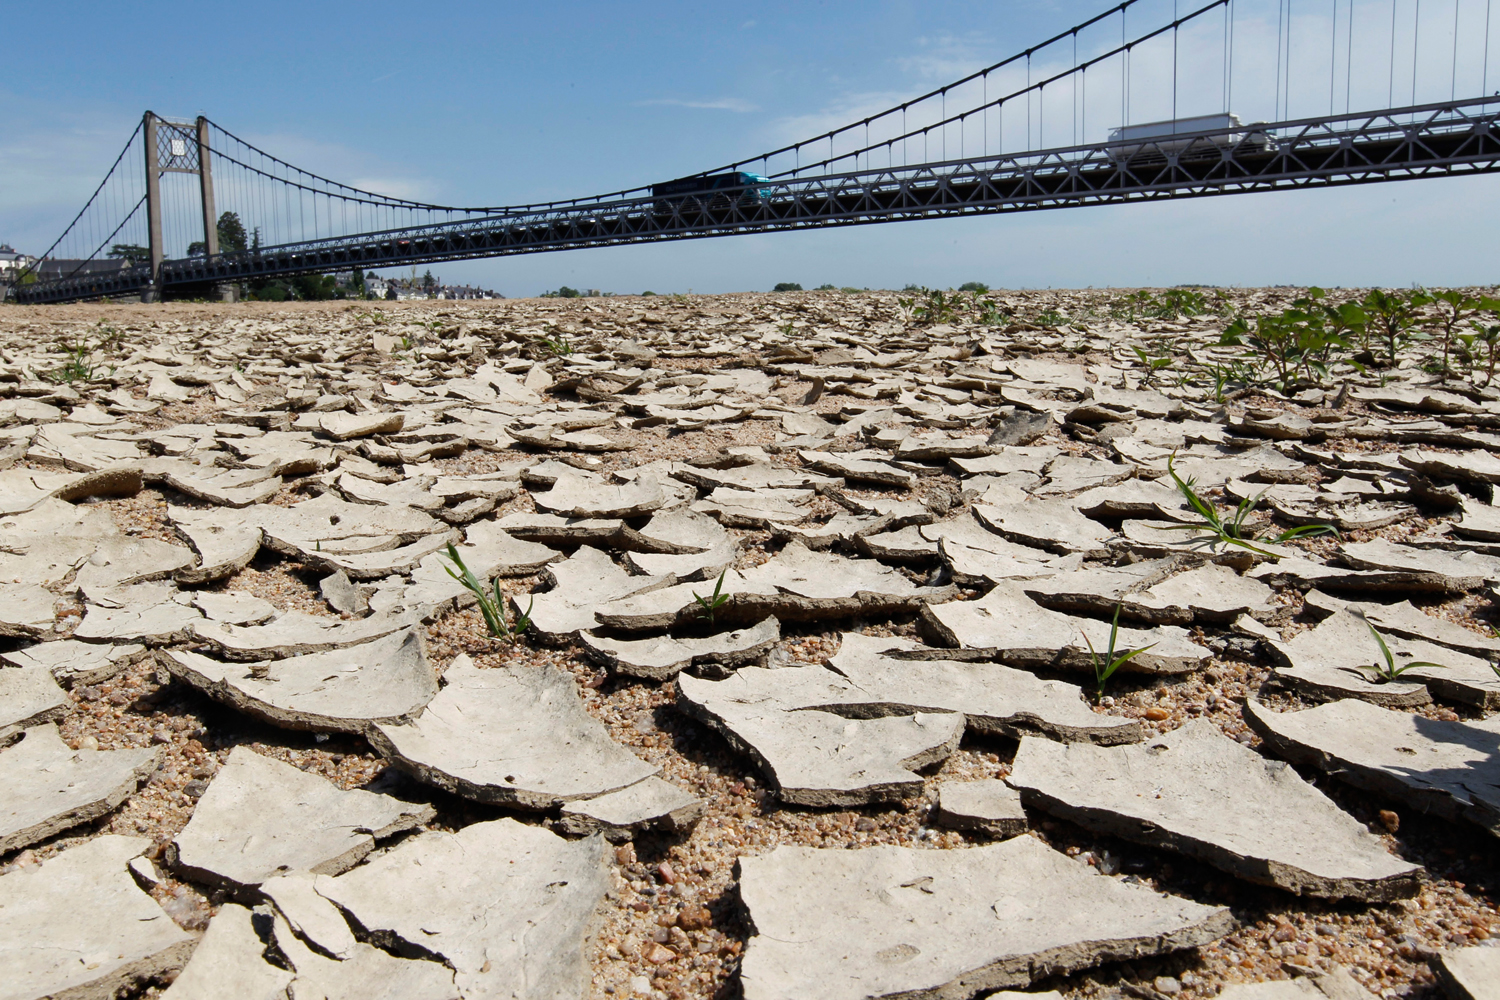 france-on-drought-alert-after-hottest-spring-since-1900